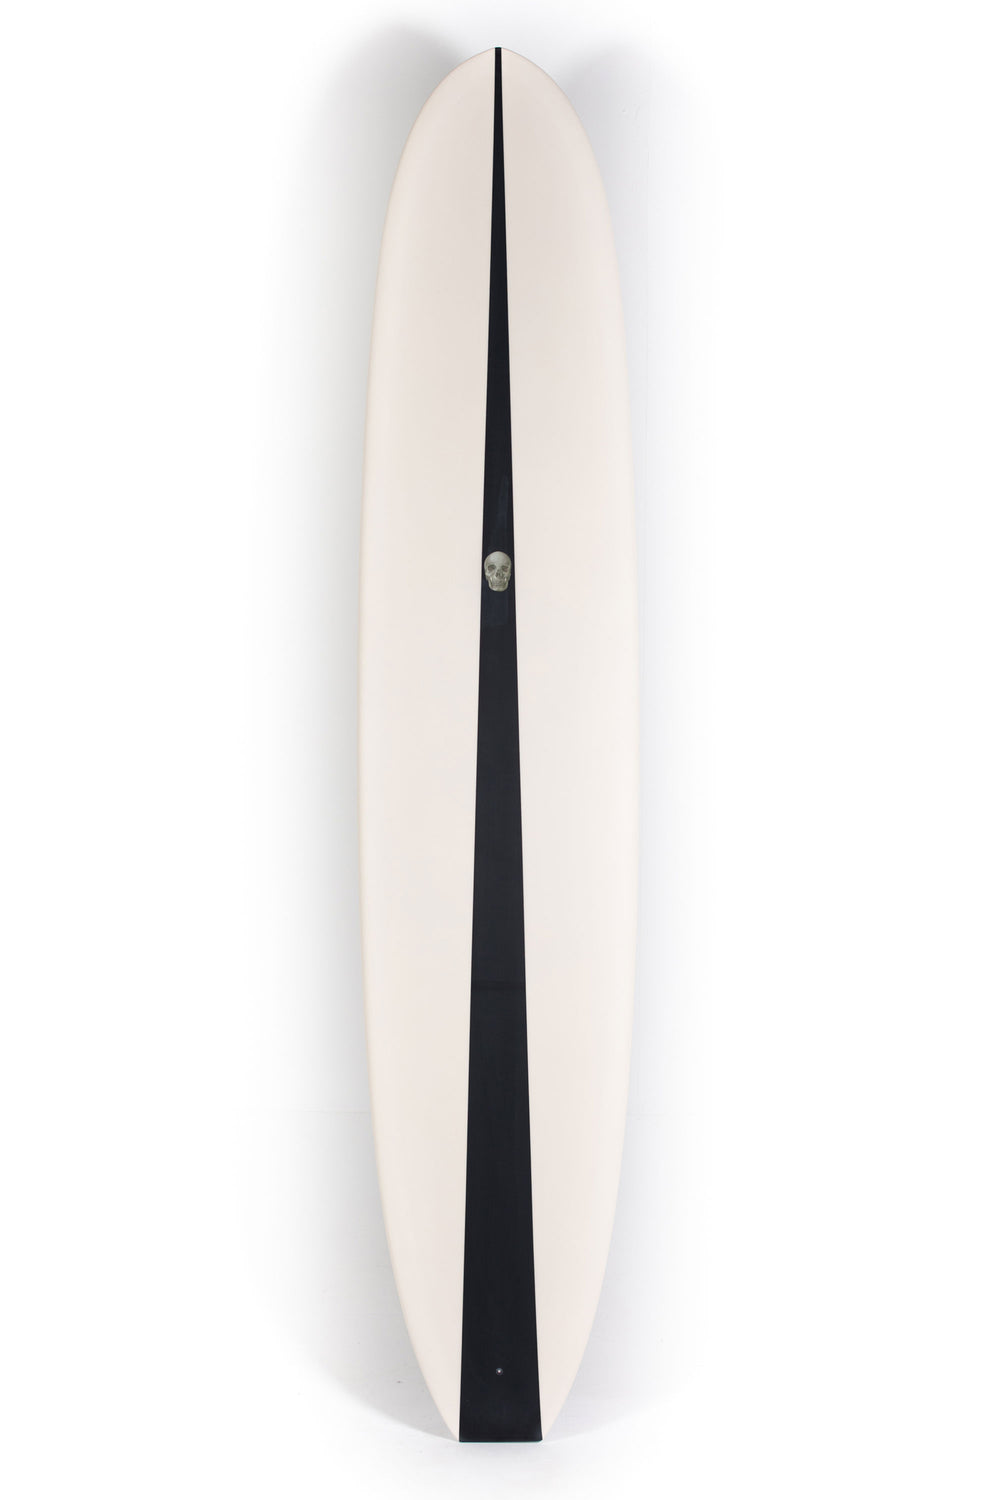 Pukas Surf Shop - Christenson Surfboard  - TRADESMAN by Chris Christenson - 9'6” x 23 1/4 x 2 7/8 - CX05455